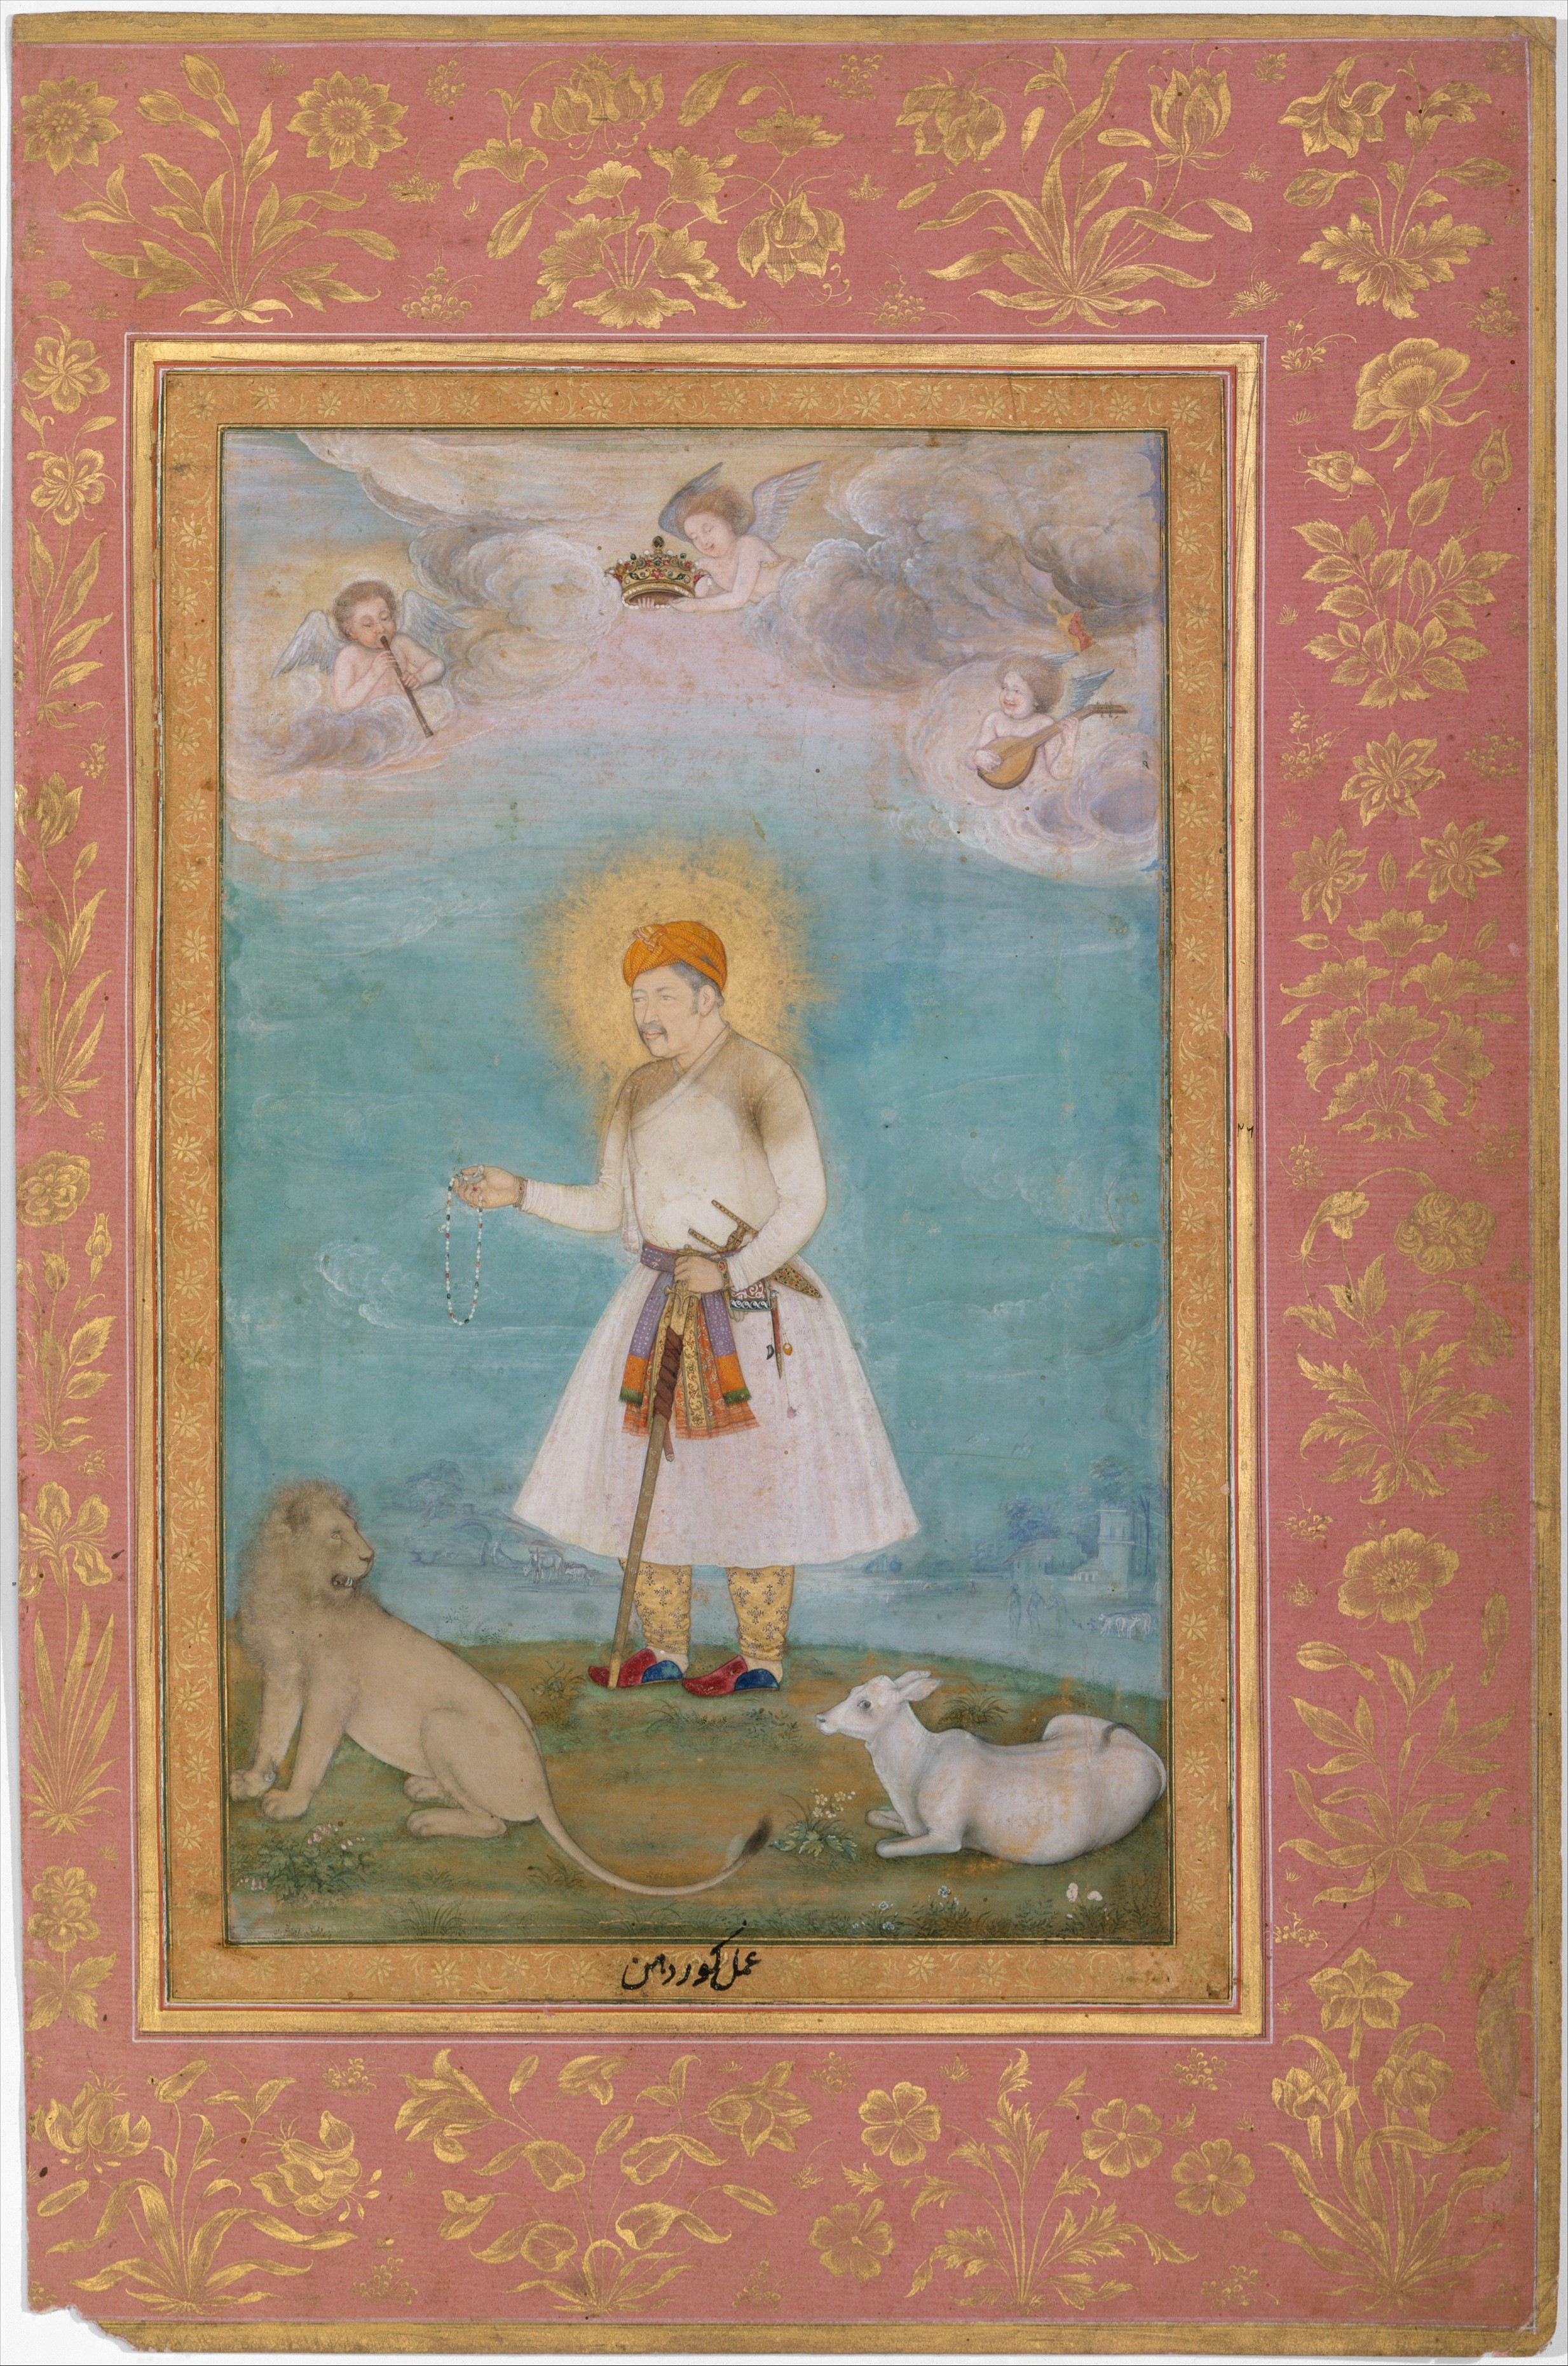 Akbar met Leeuw en Kalf by  Govardhan - 1630 